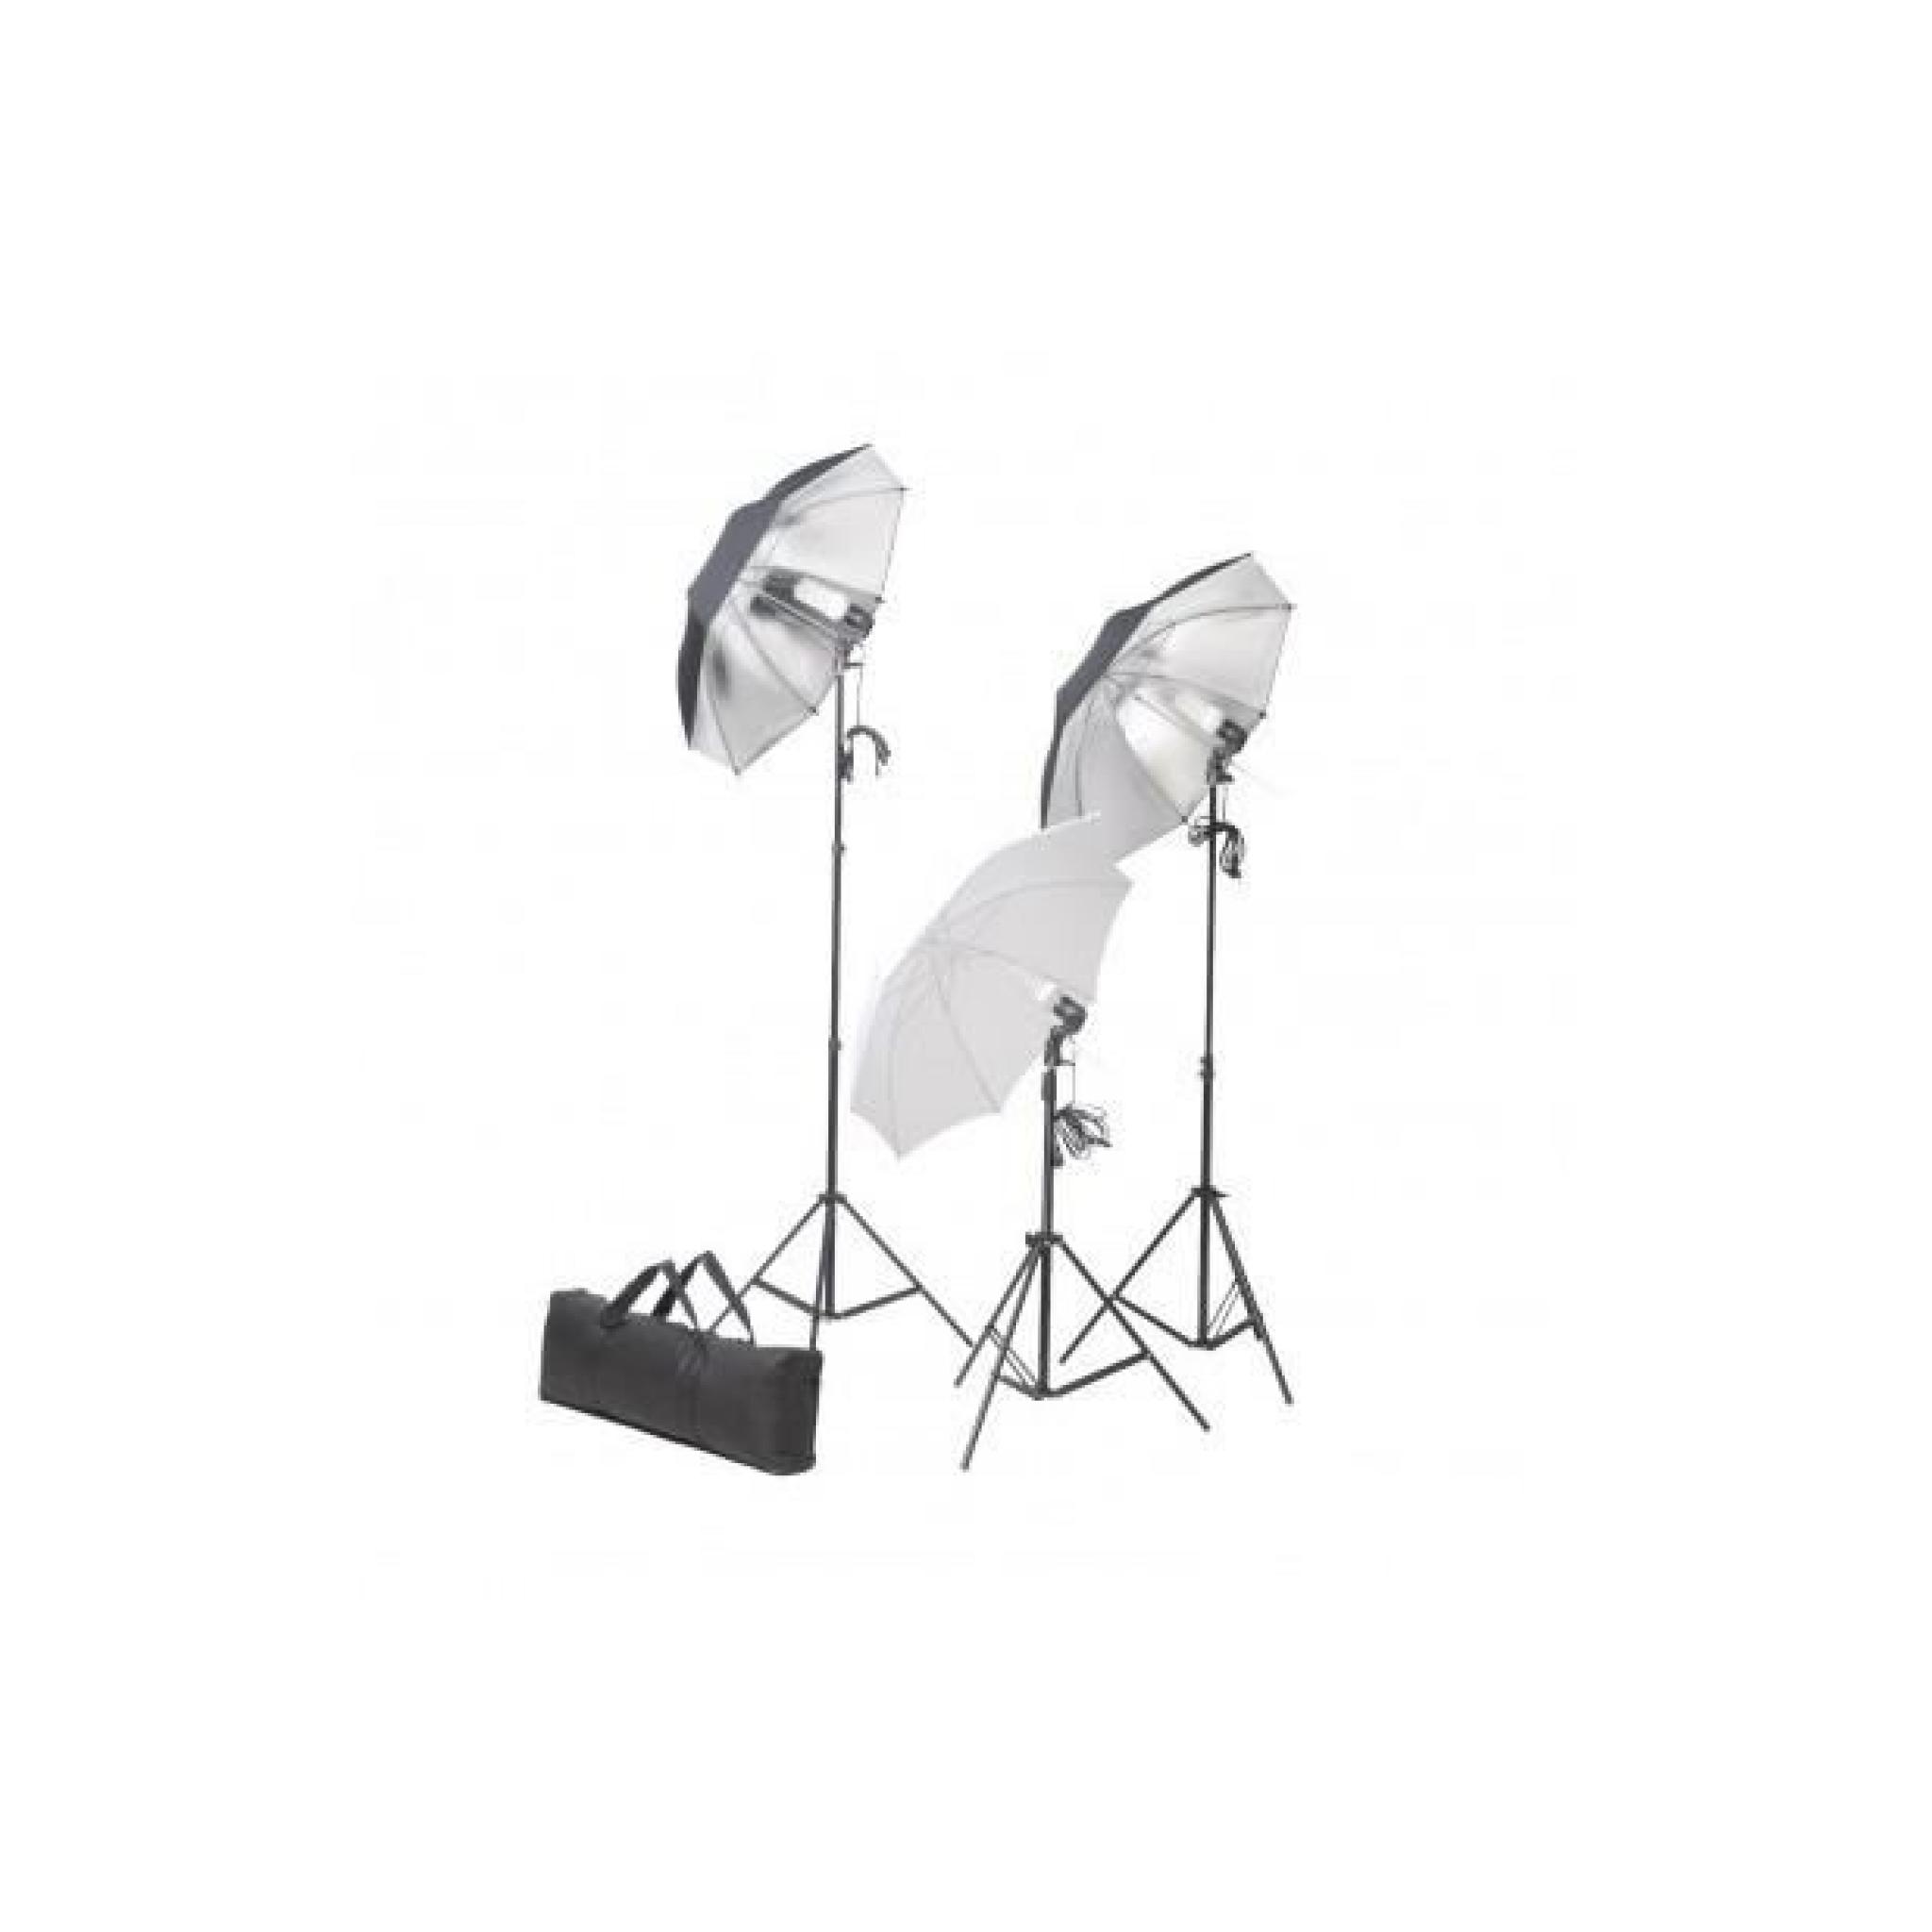 Superbe Kit studio 3 lampes daylight & accessoires 